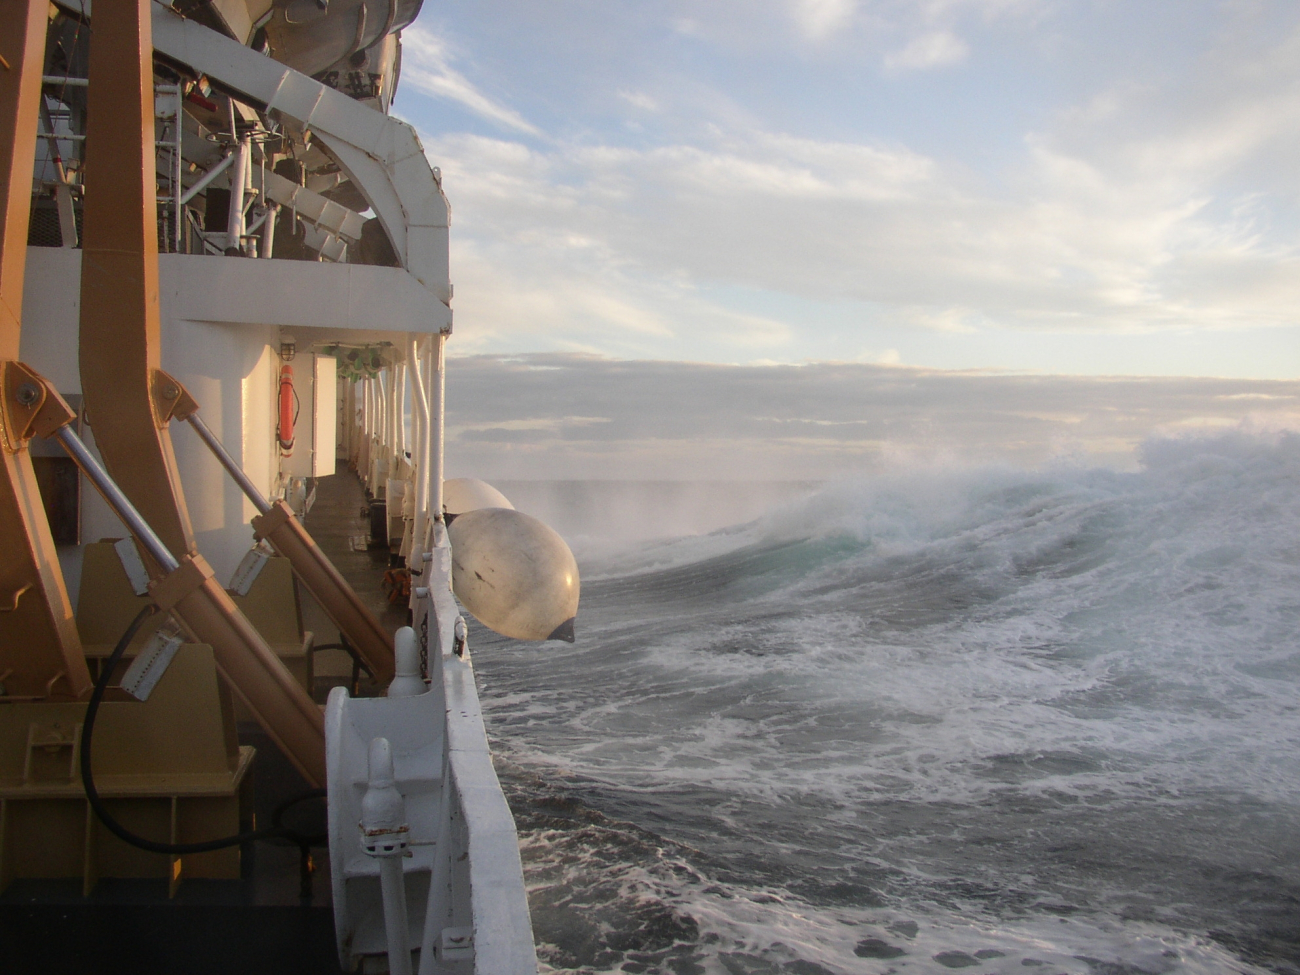 NOAA Ship RAINIER crossing the Gulf of Alaska in stormy seas